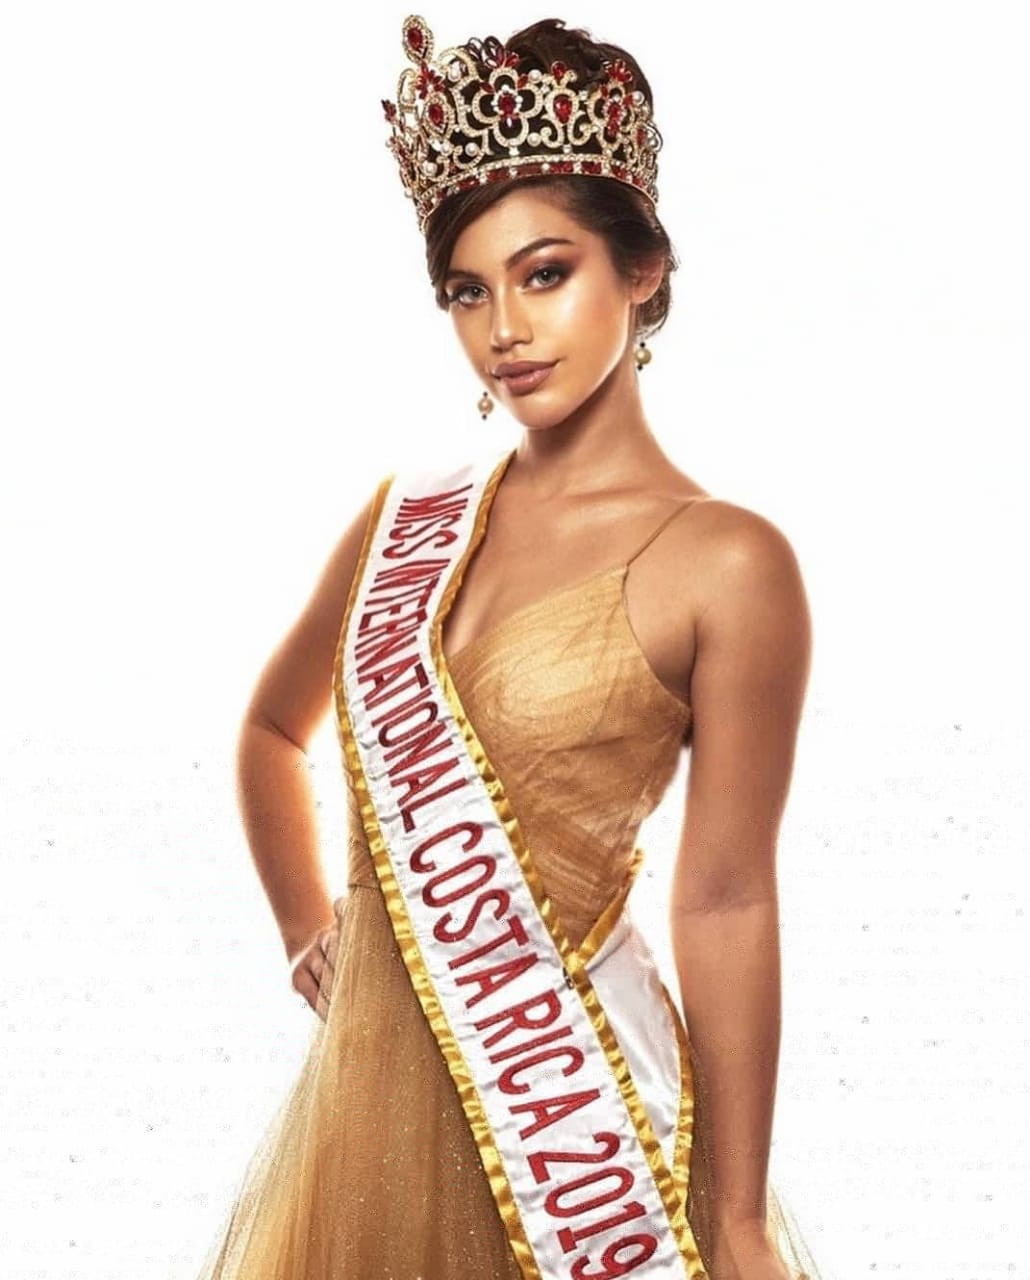 MissWorld - Tamara Dal Maso Gardela (miss international costa rica 2019) designada Miss Mundo Costa Rica 2021 (andrea montero renuncio). Rk2hCP